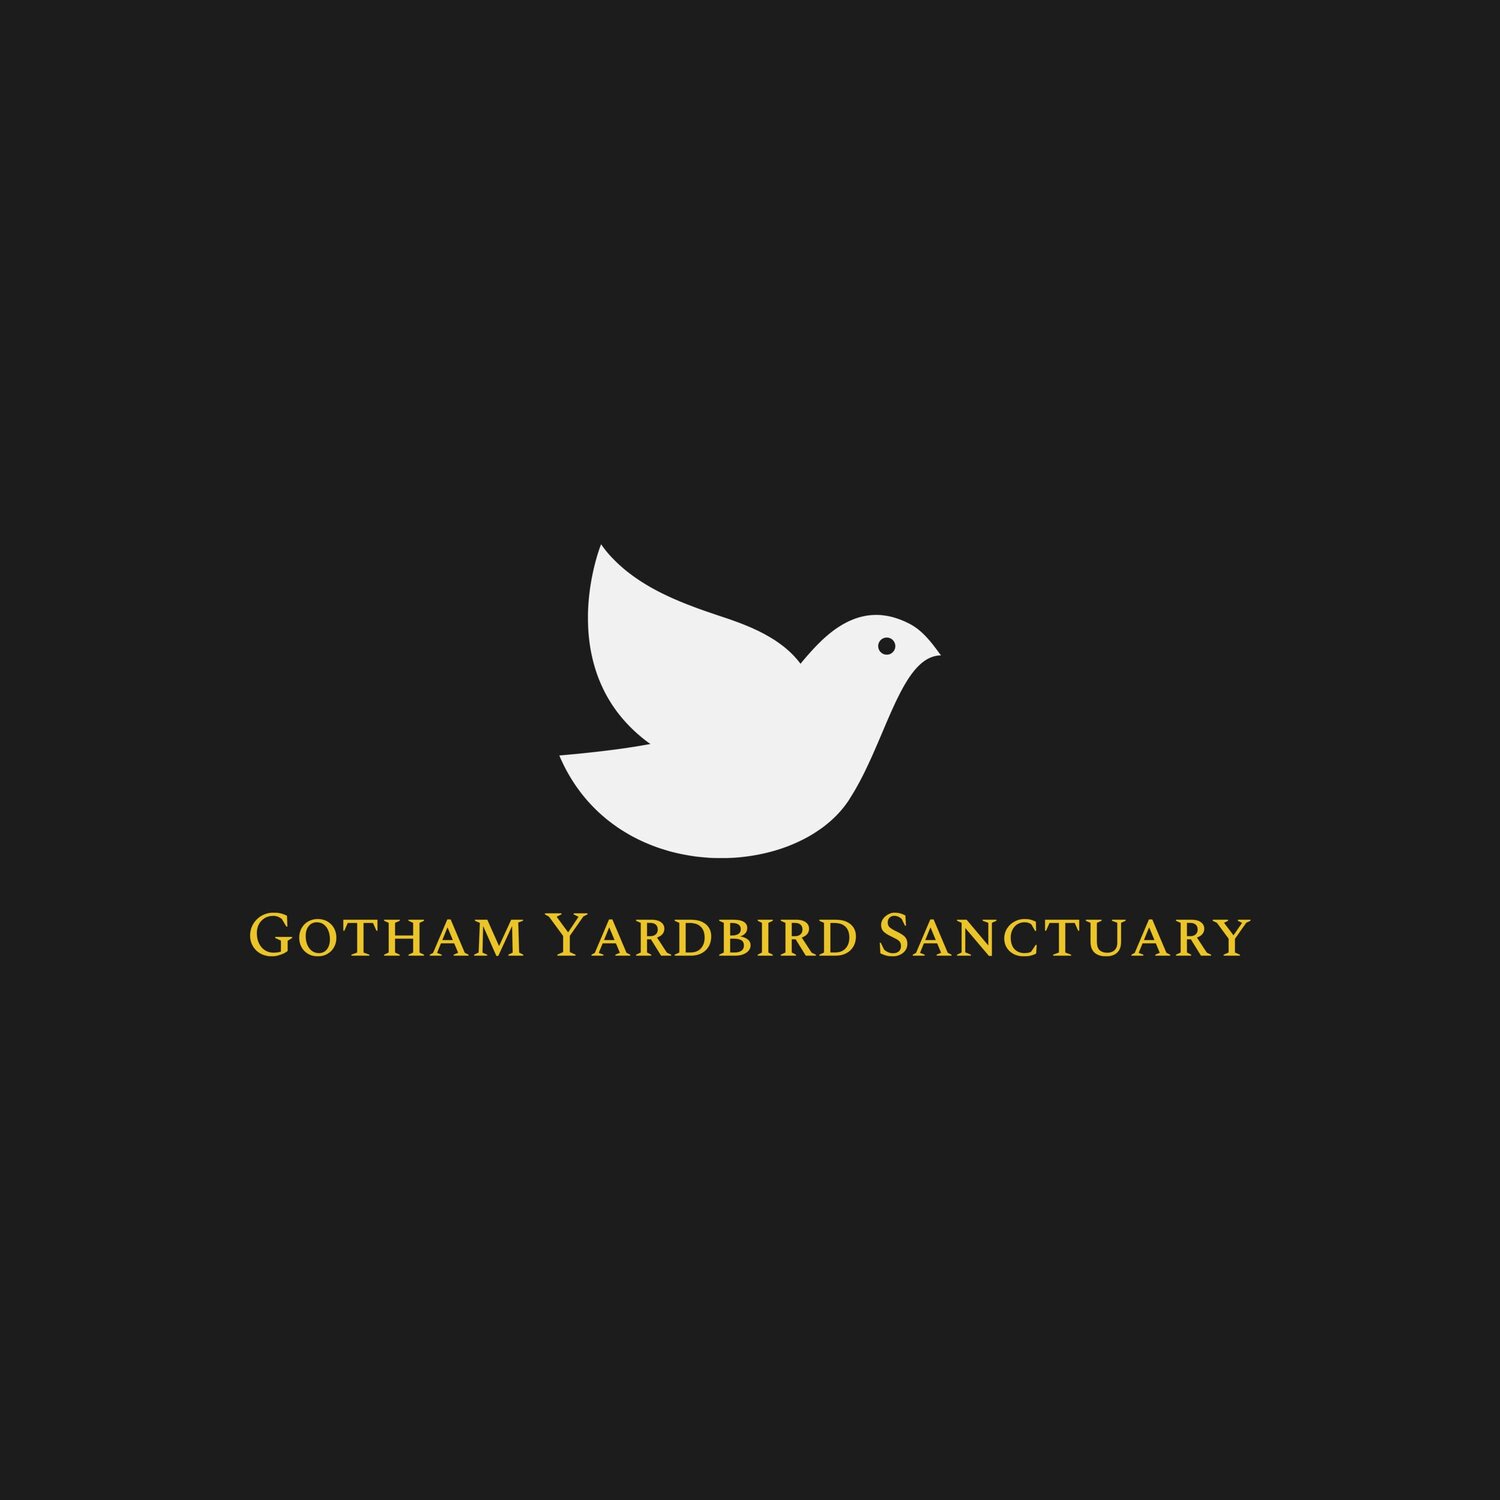 Gotham Yardbird Sanctuary